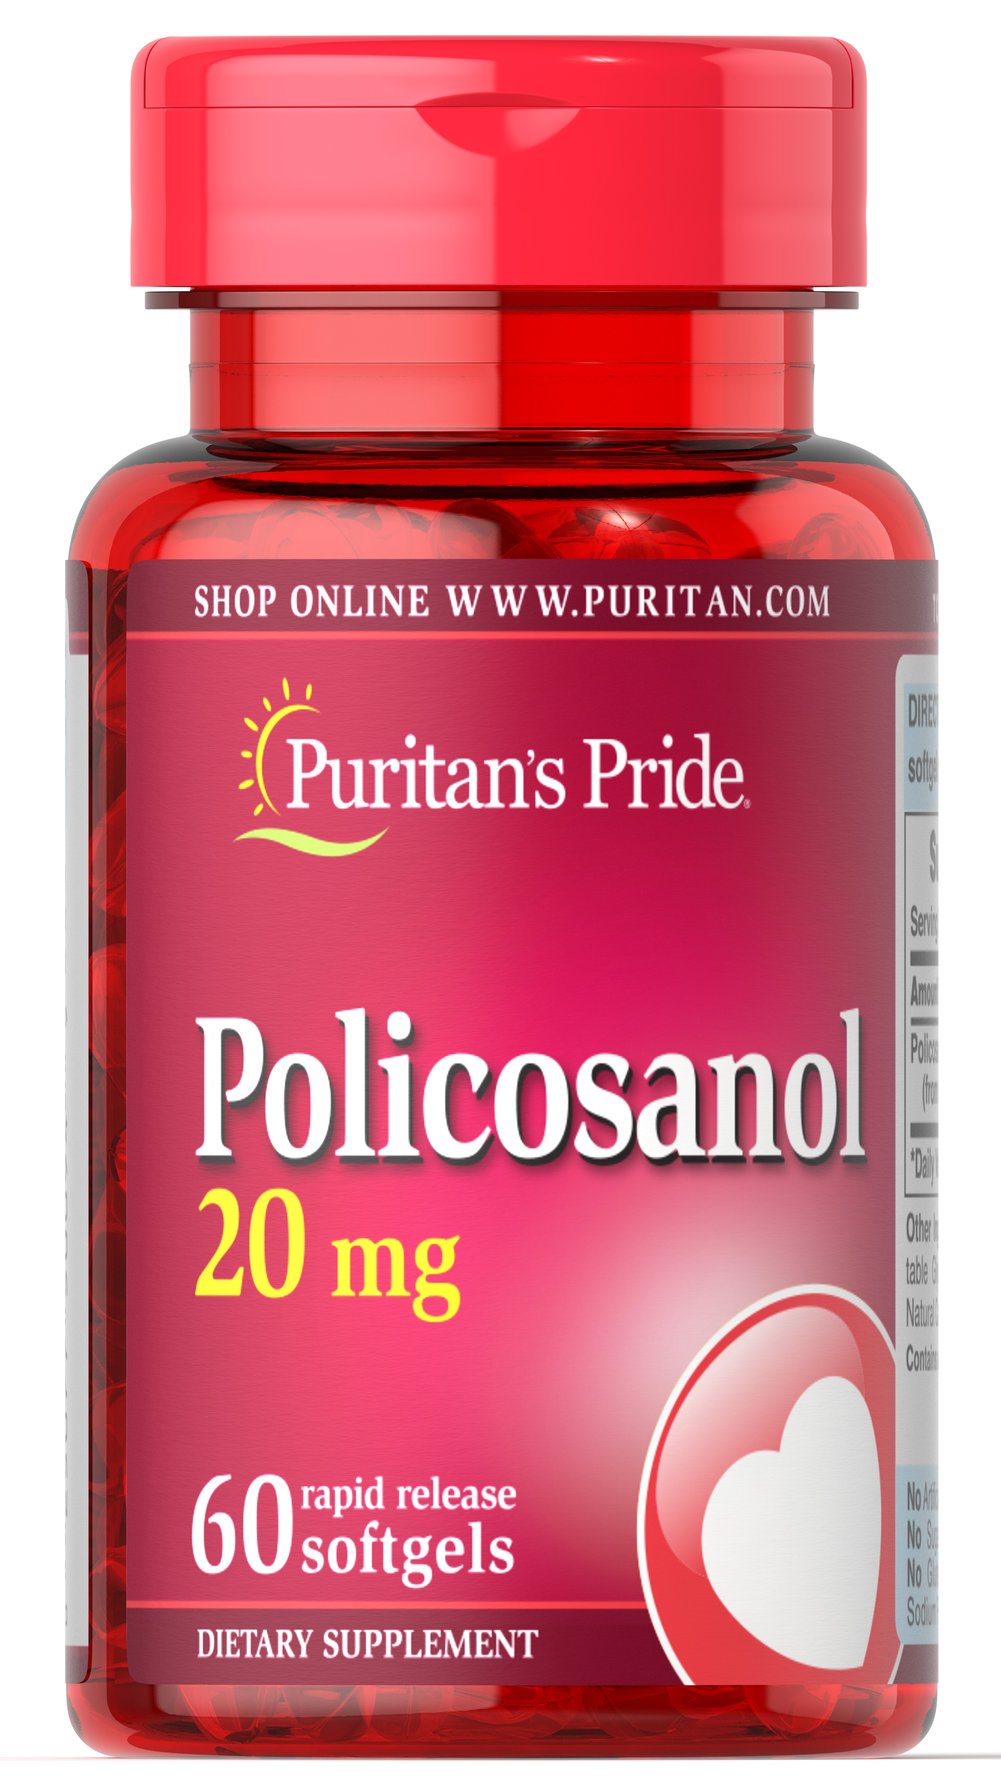  Policosanol 20 mg